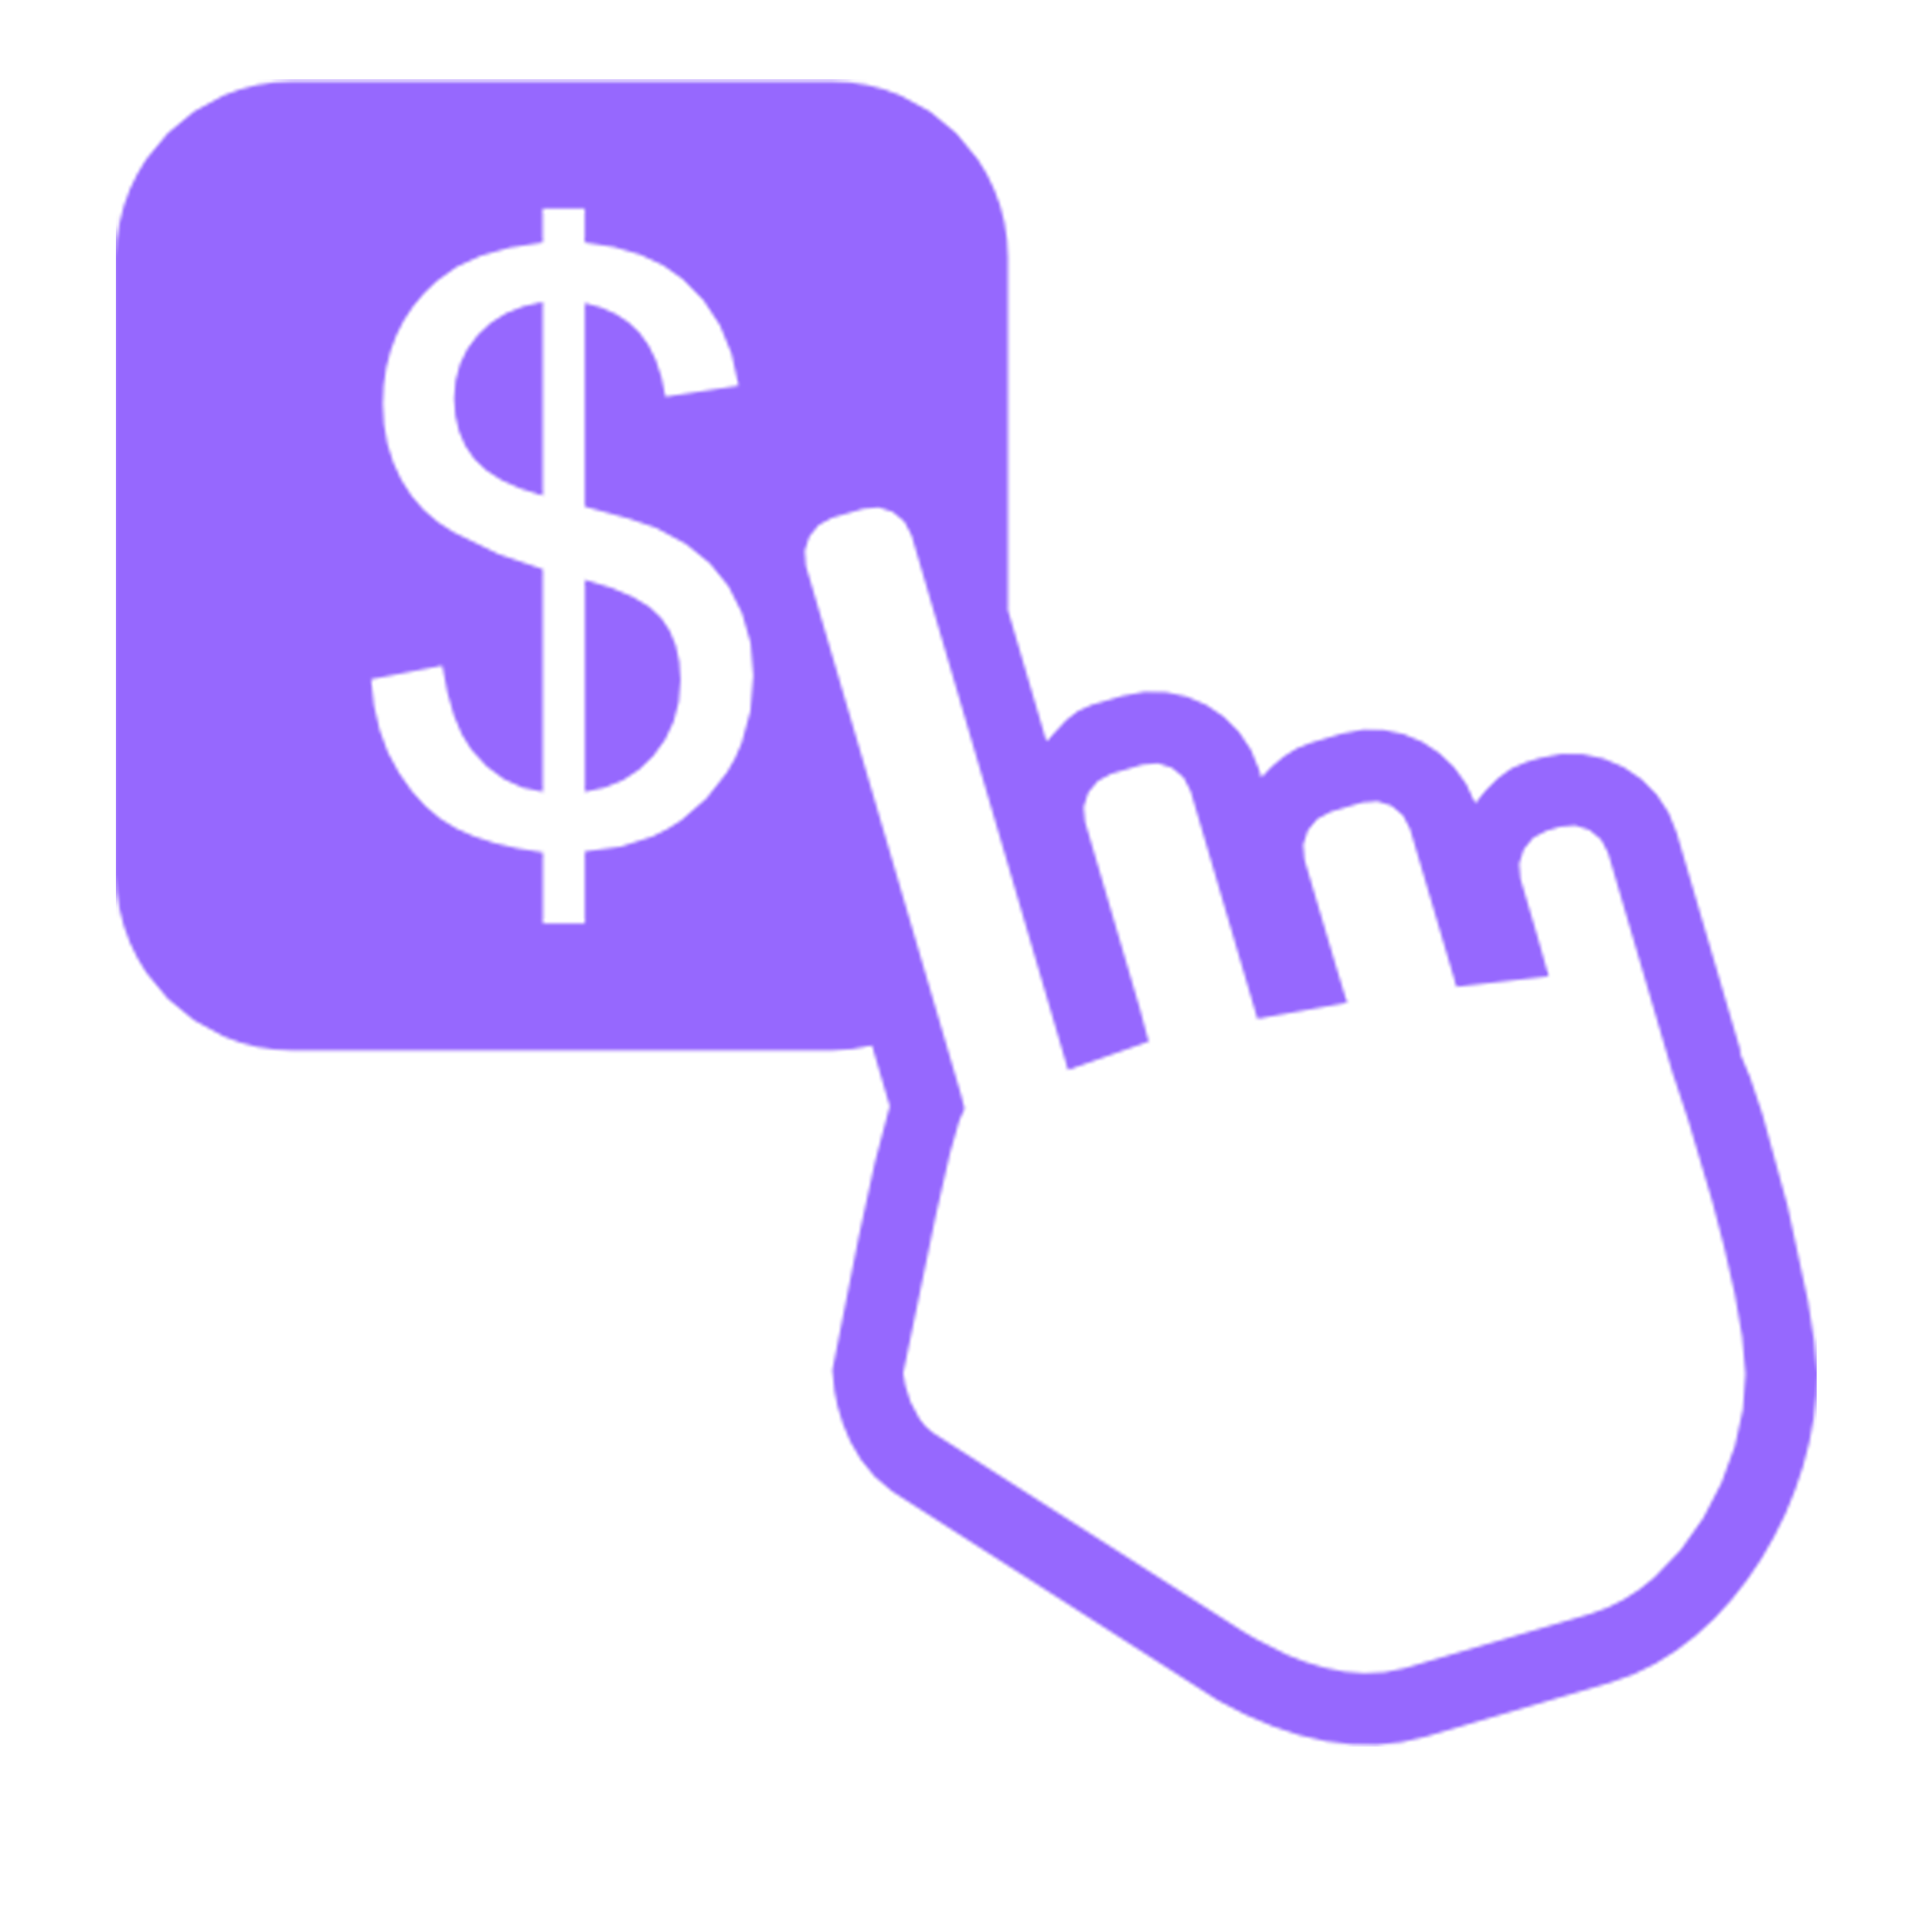 Purple pay per click (PPC) web icon for award winning digital marketing agency